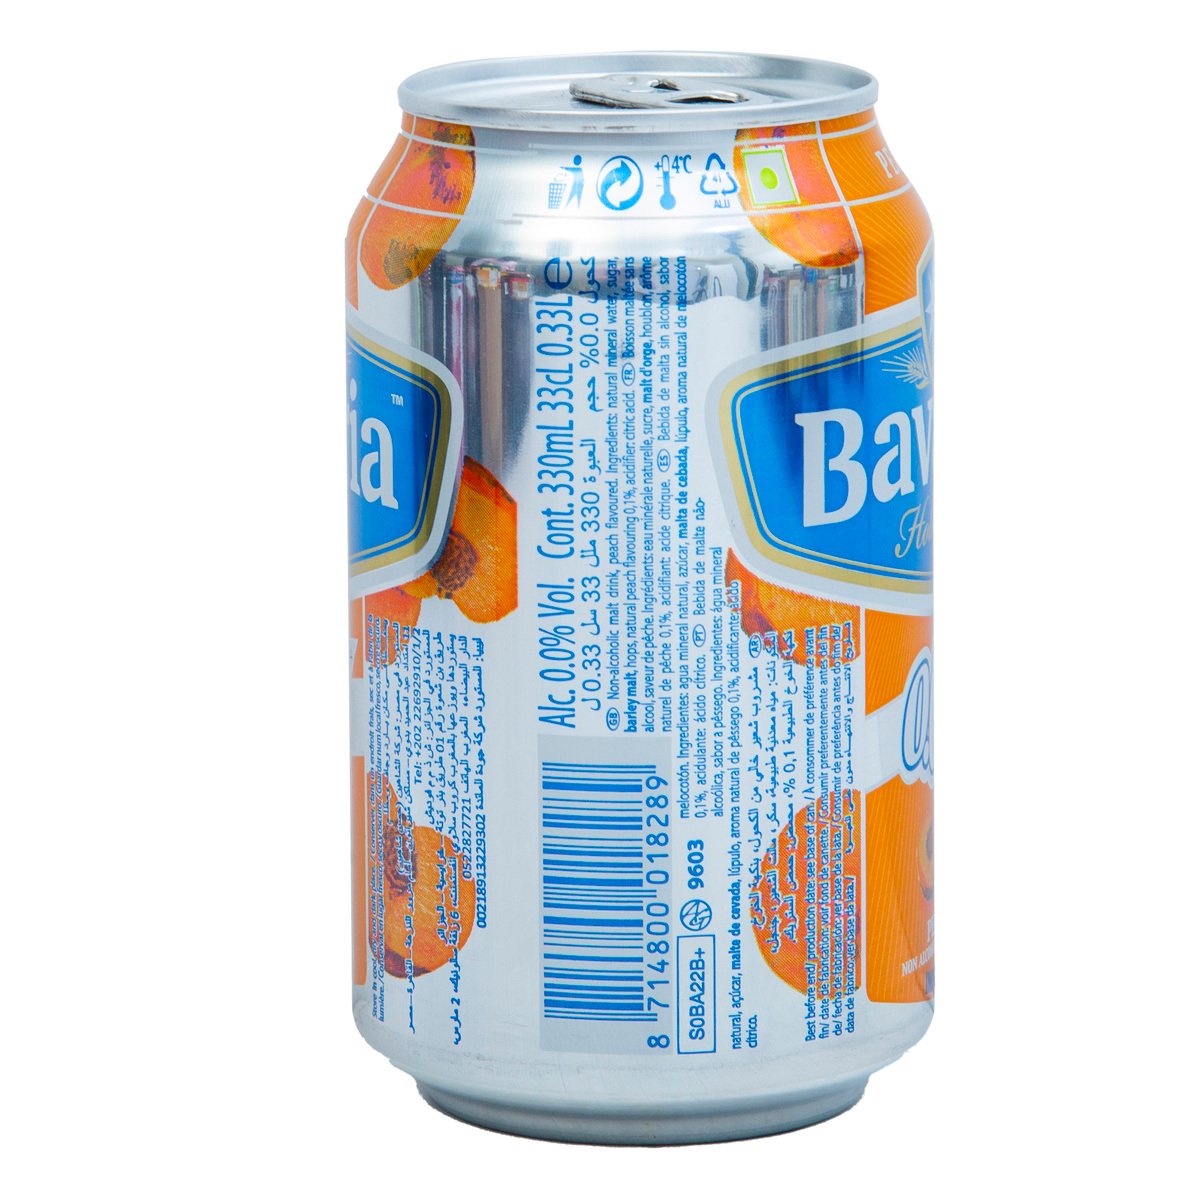 Bavaria Non Alcoholic Malt Drink Peach 330 ml